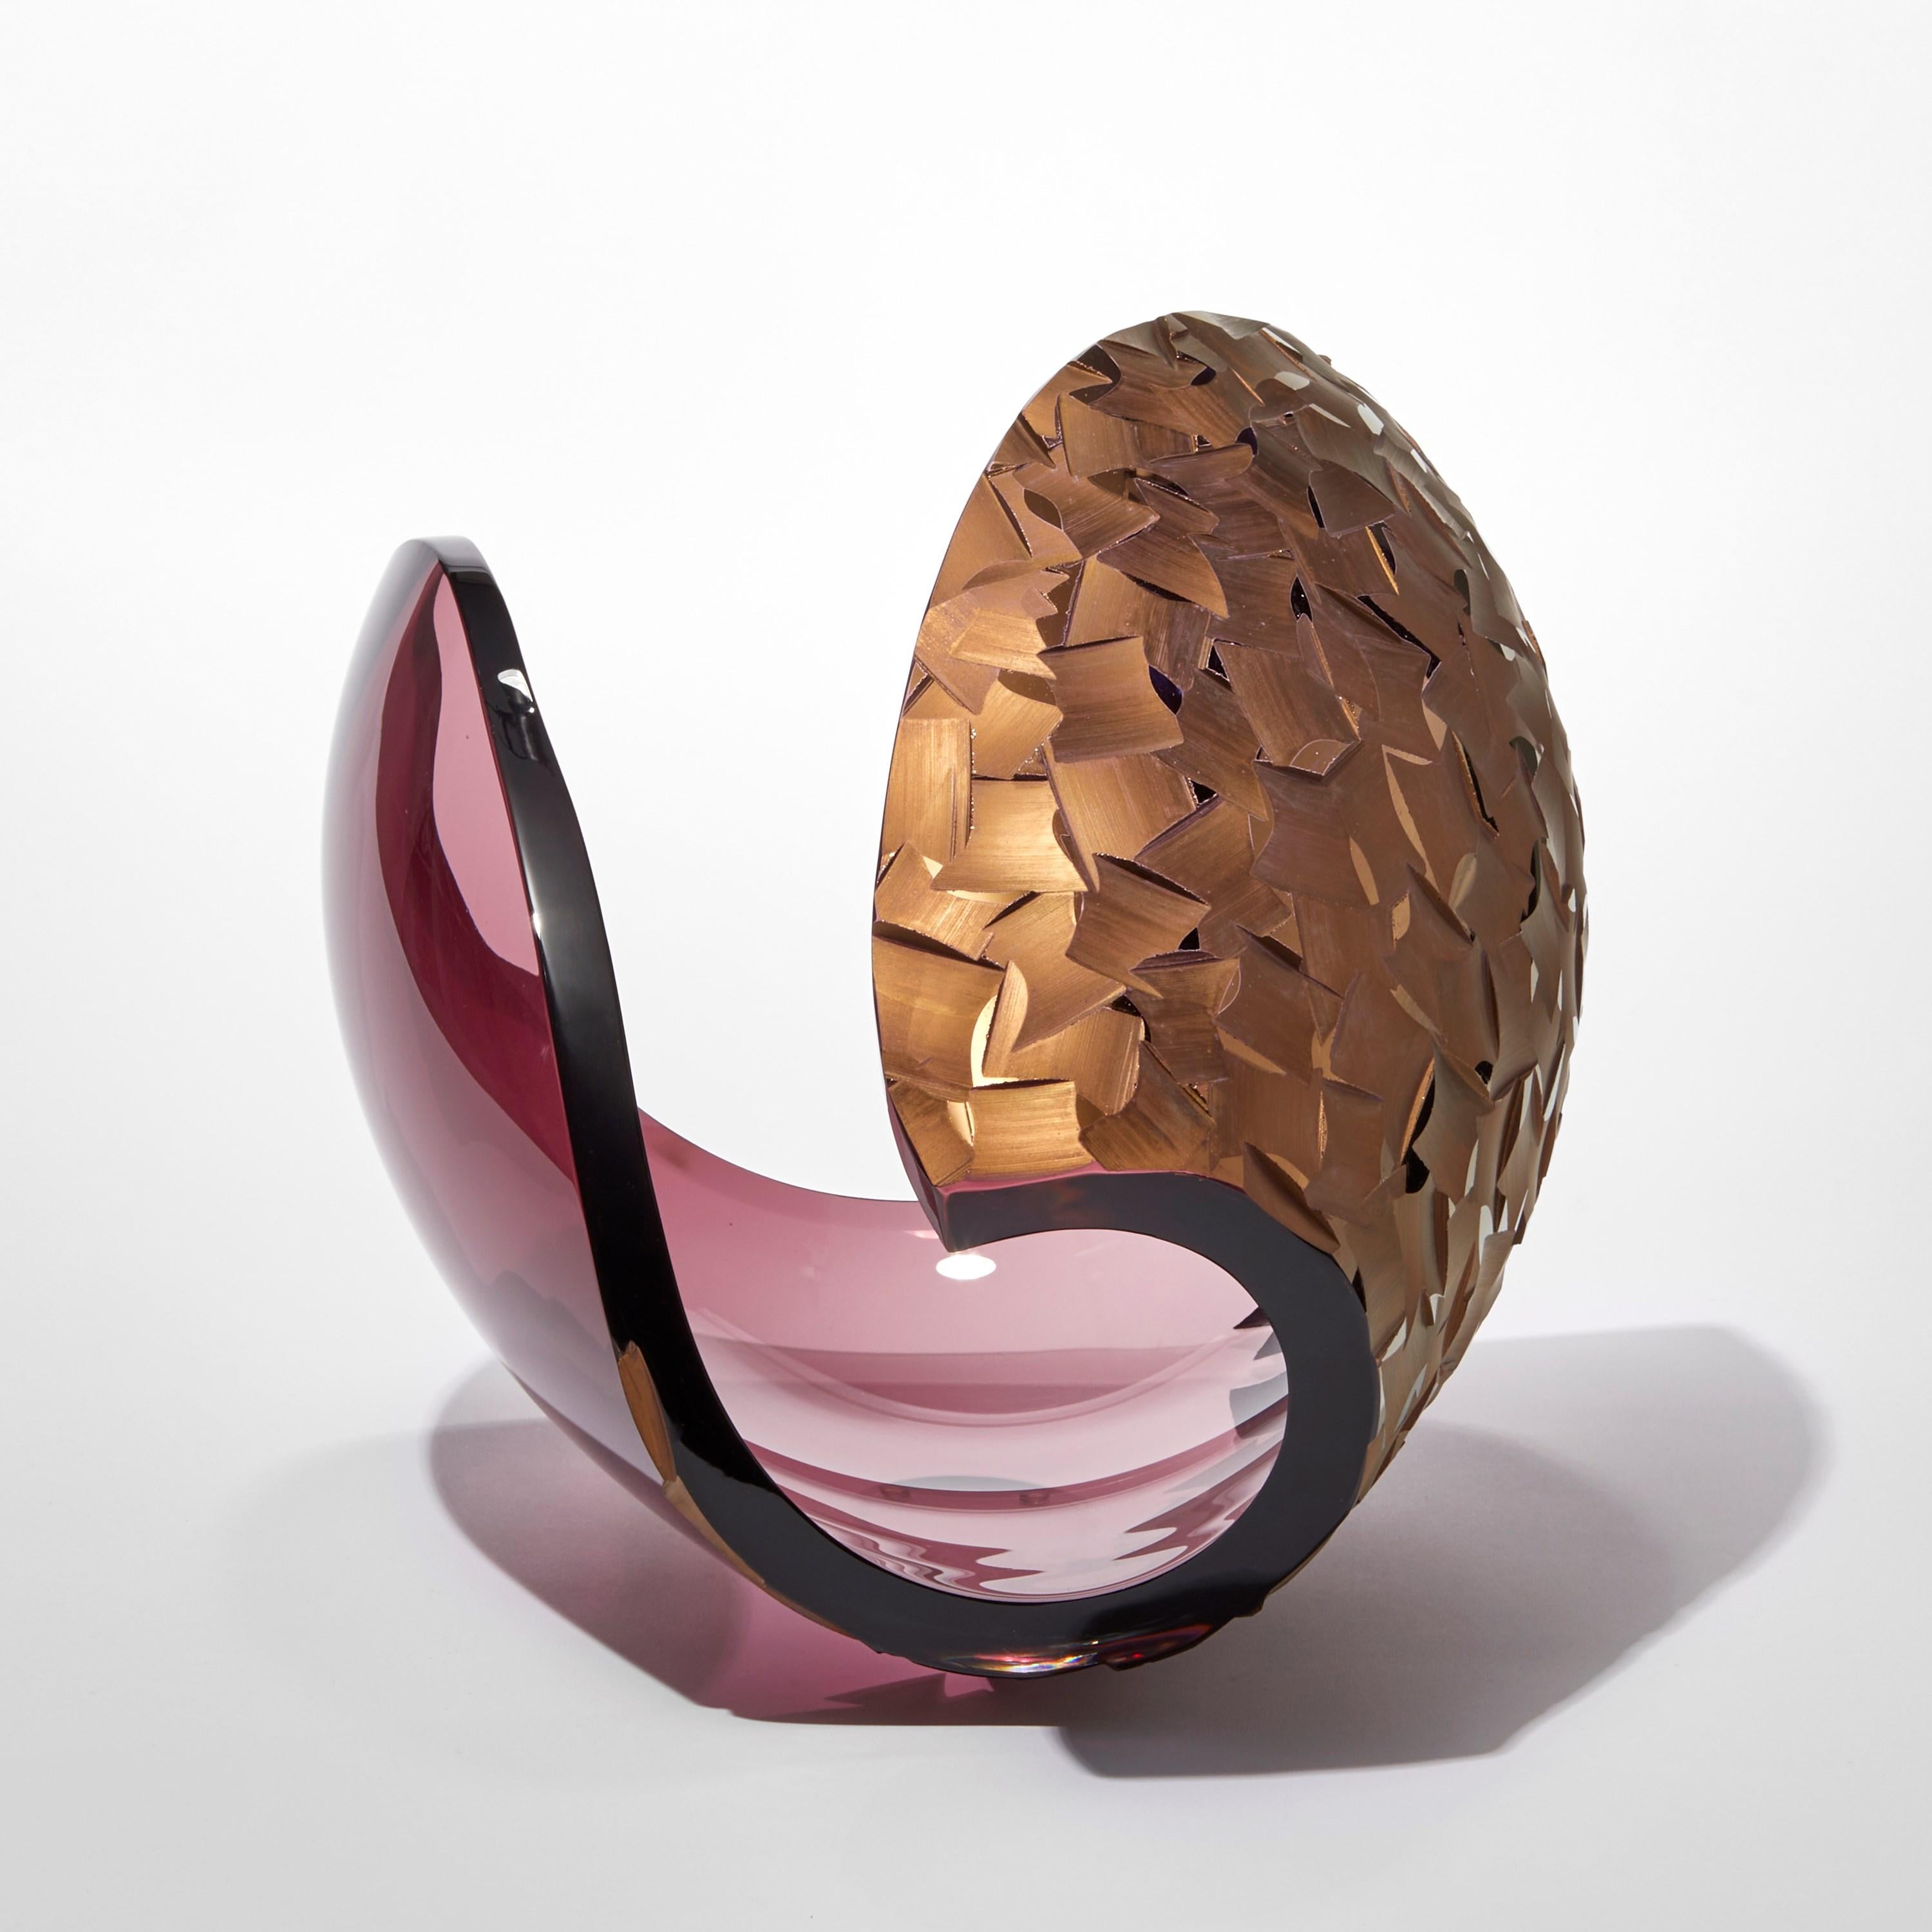 Organic Modern Planet in Burgundy Slate, aubergine & bronze glass sculpture by Lena Bergström For Sale